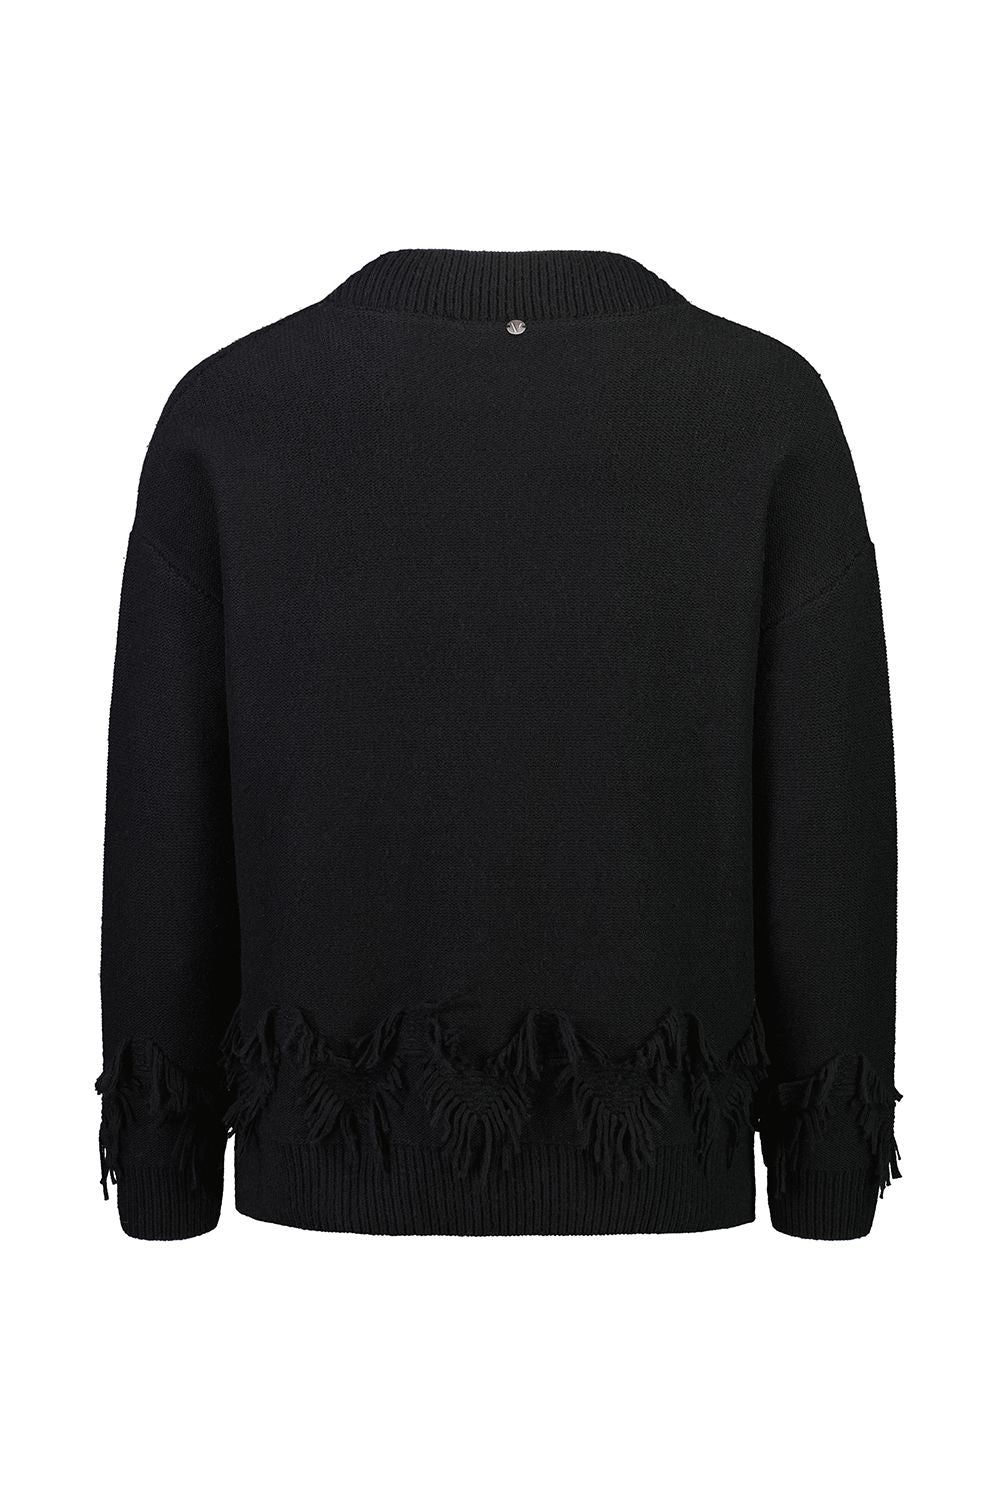 Verge Kick Sweater - Black